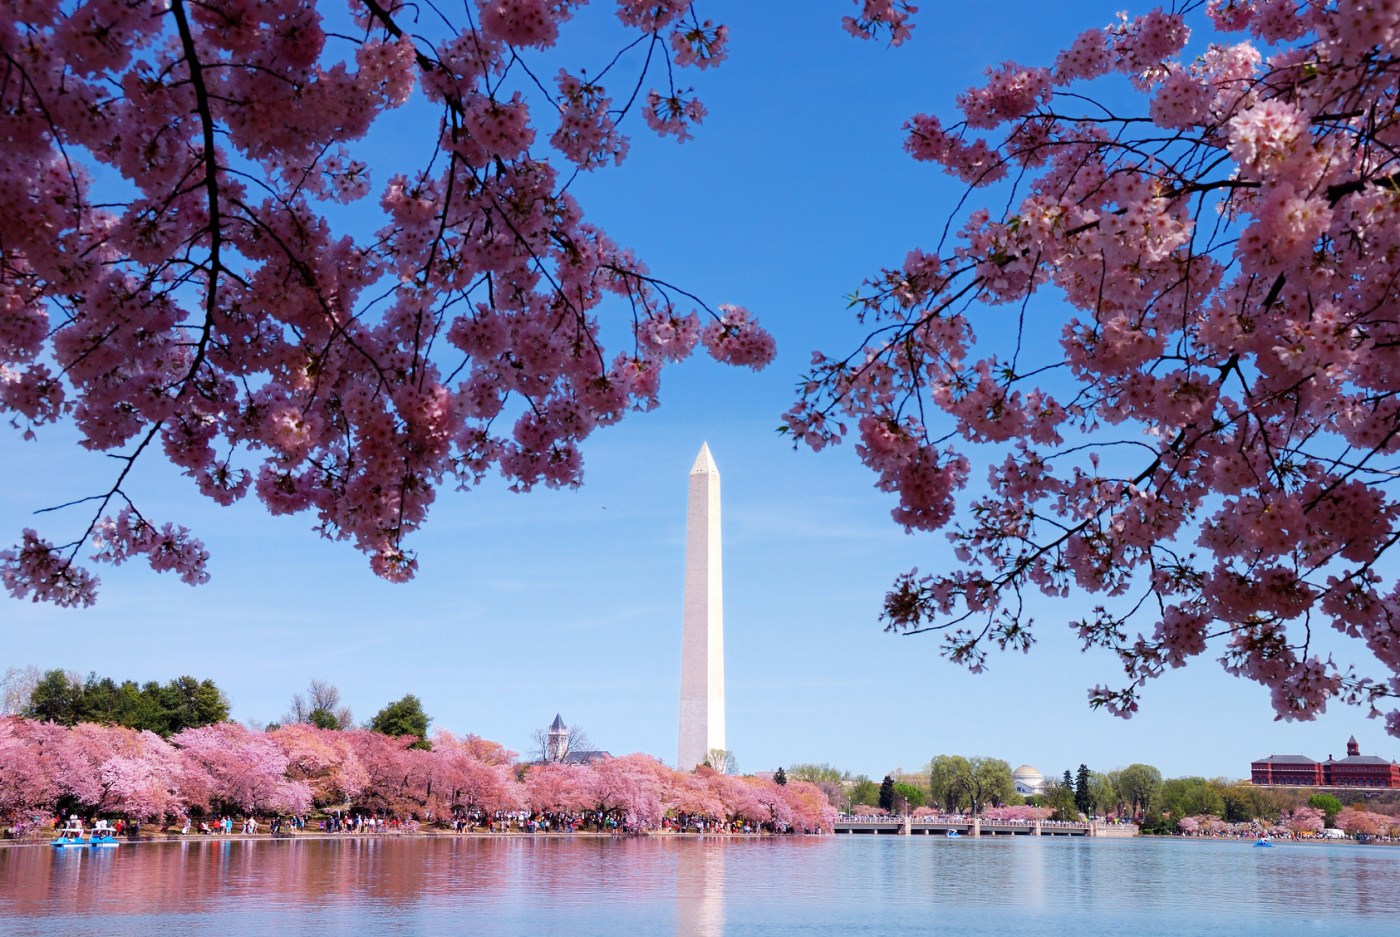 Cherry blossoms and Washington Monument over lake, Washington, DC